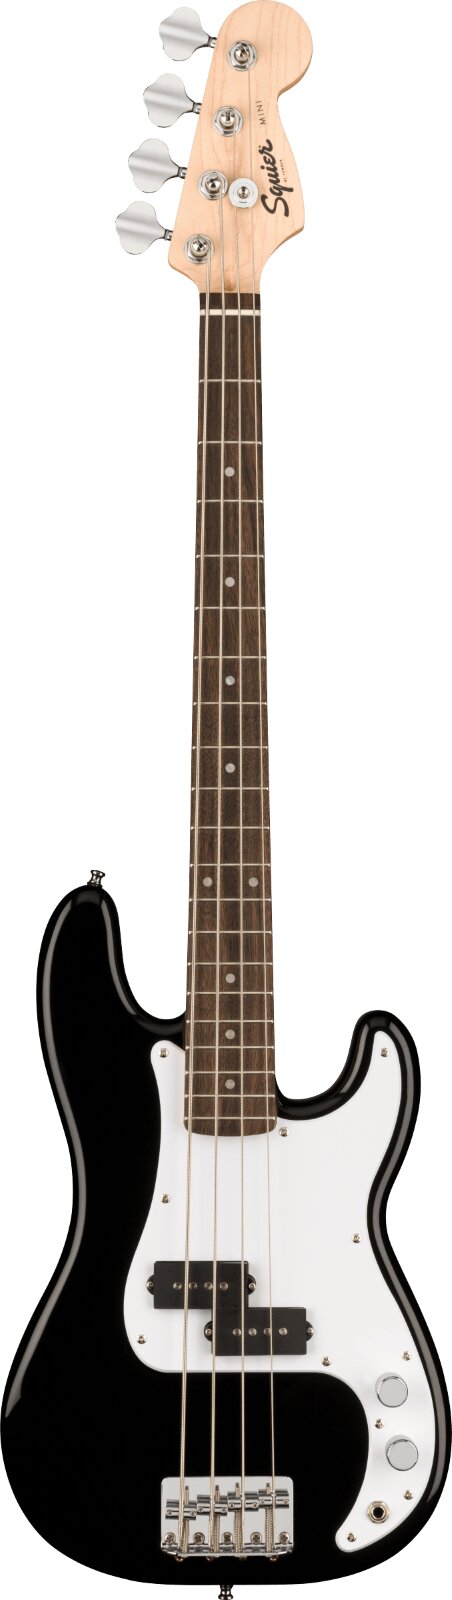 Squier Mini P Bass Laurel Fingerboard Black : photo 1